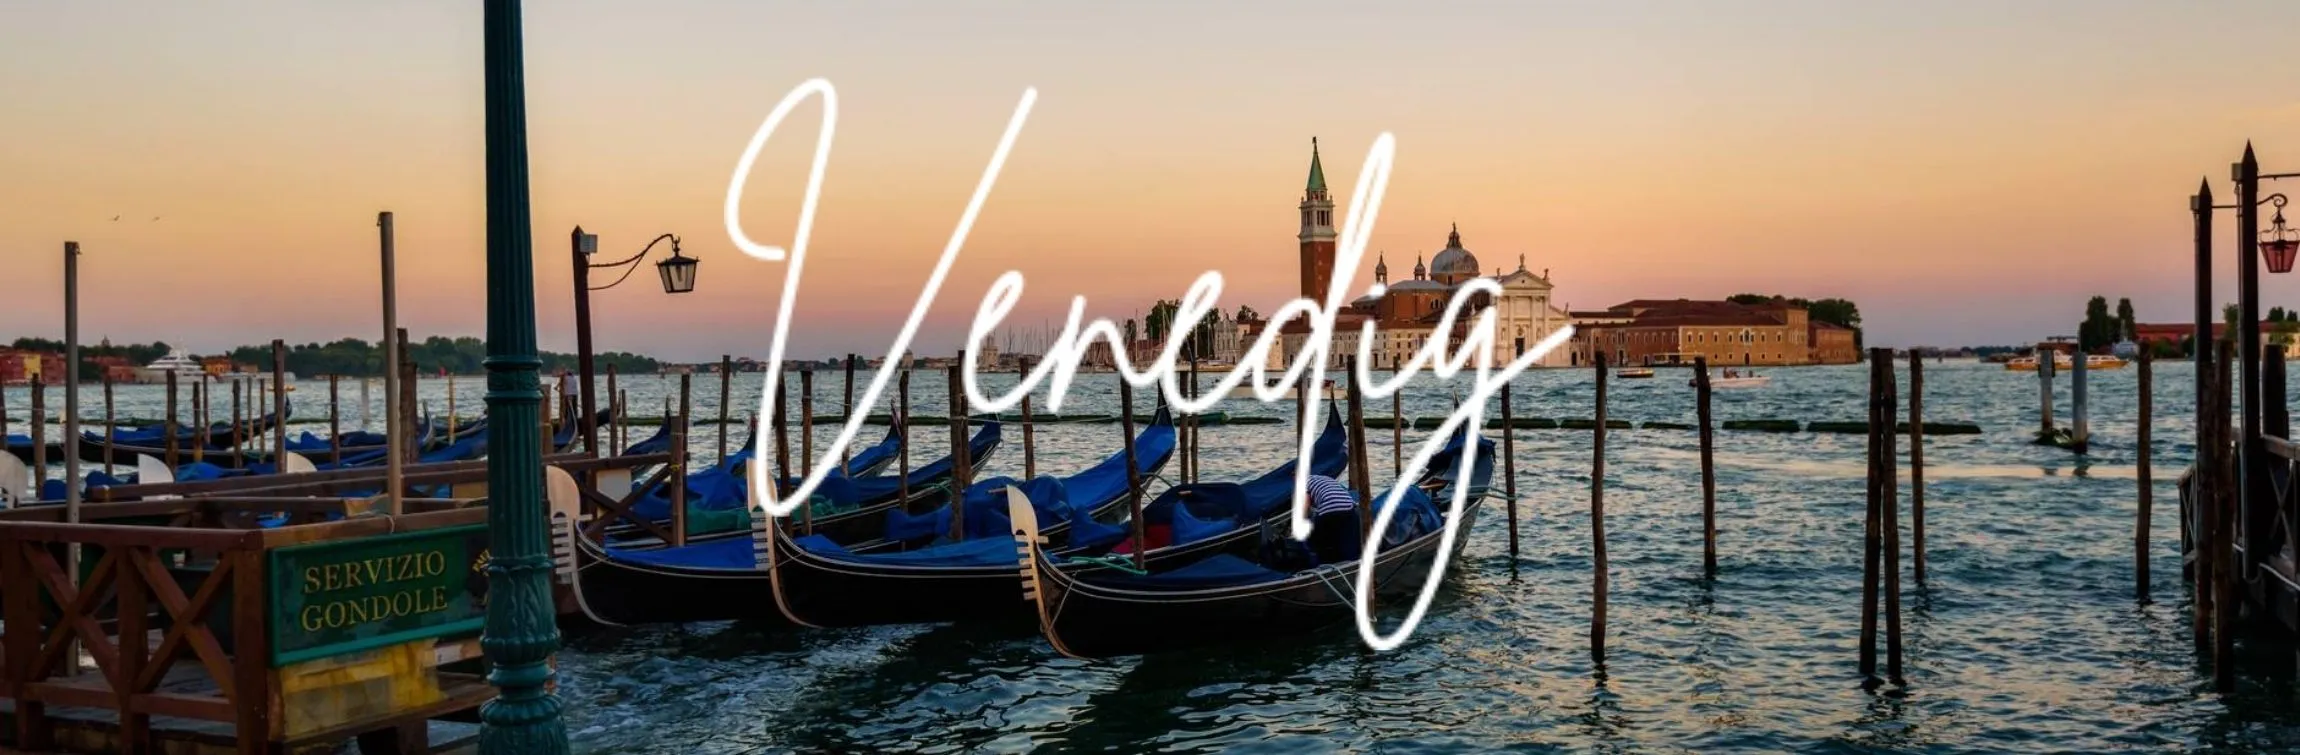 Venedig Fotospots: Die schönsten Instagram-Spots in der Lagunen-Stadt